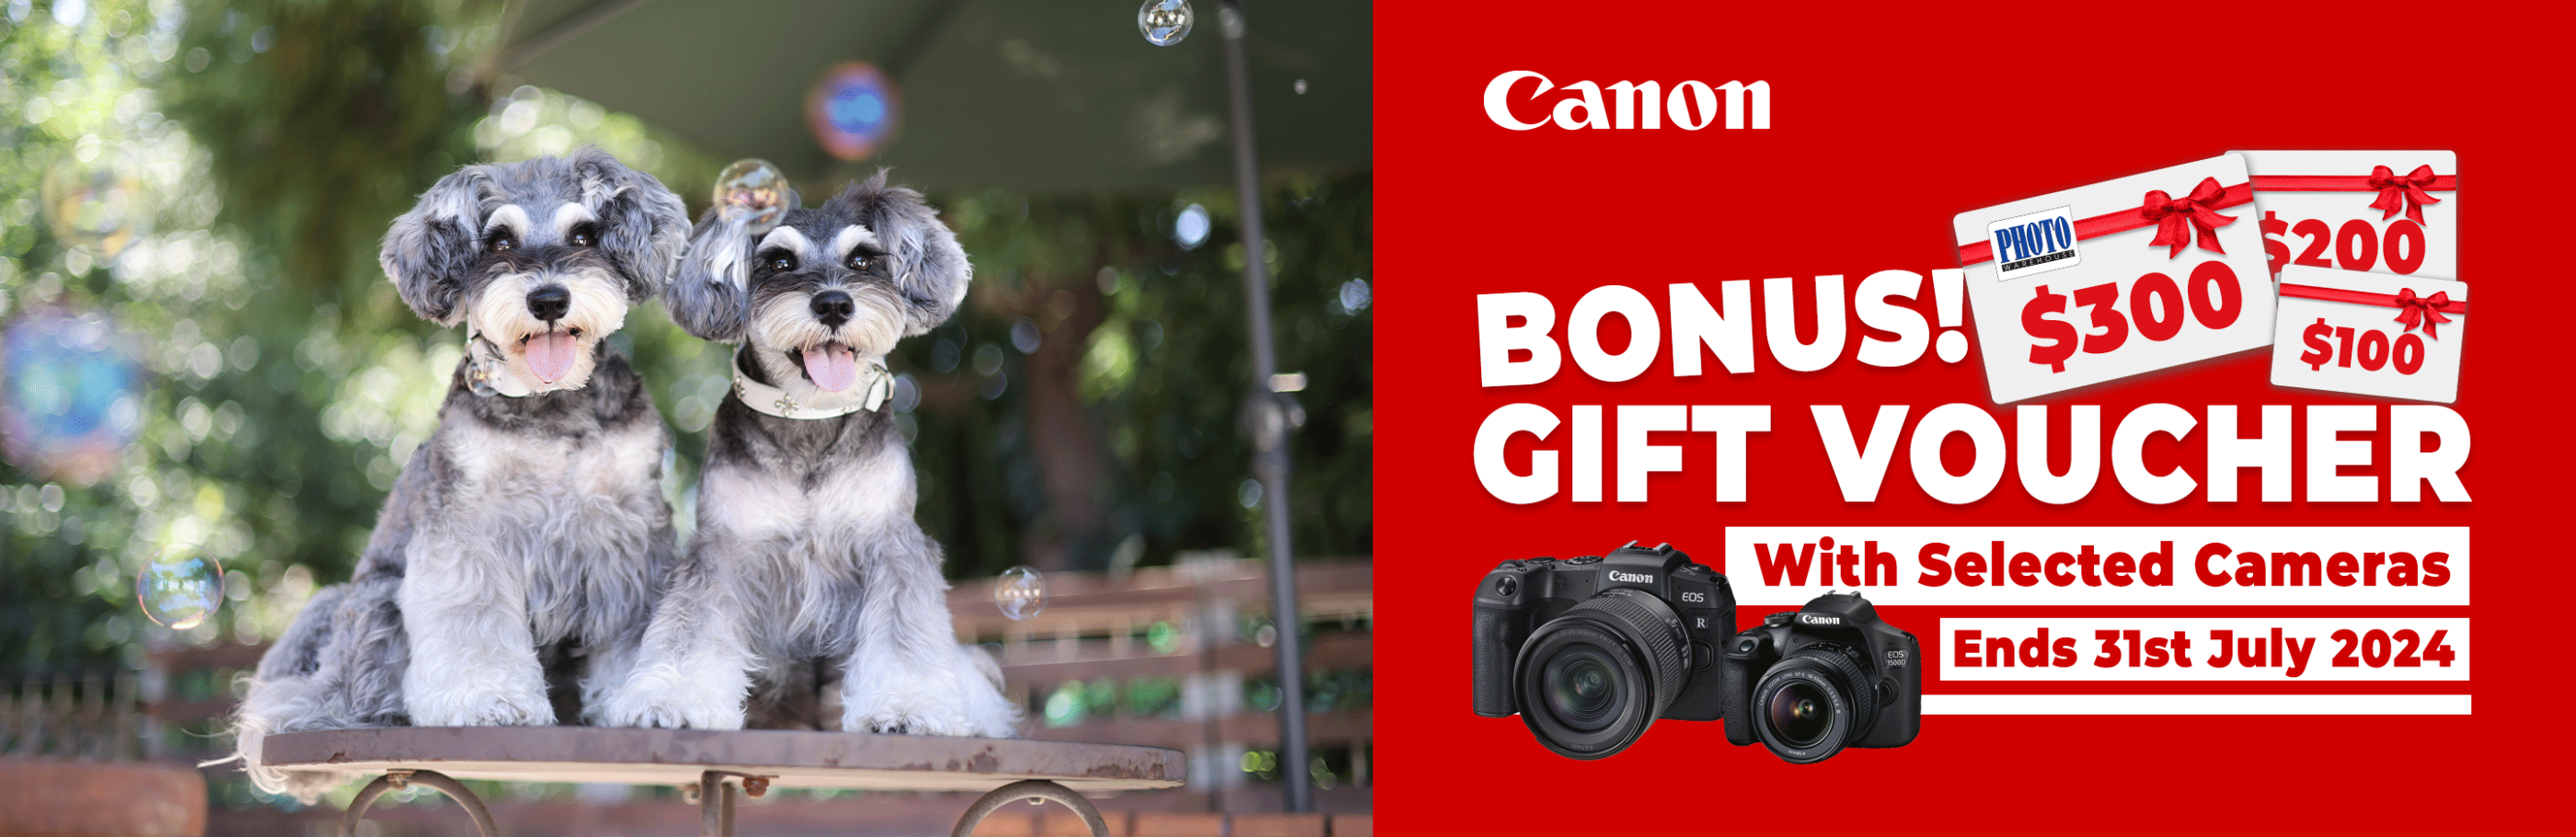 Canon Bonus Gift Voucher